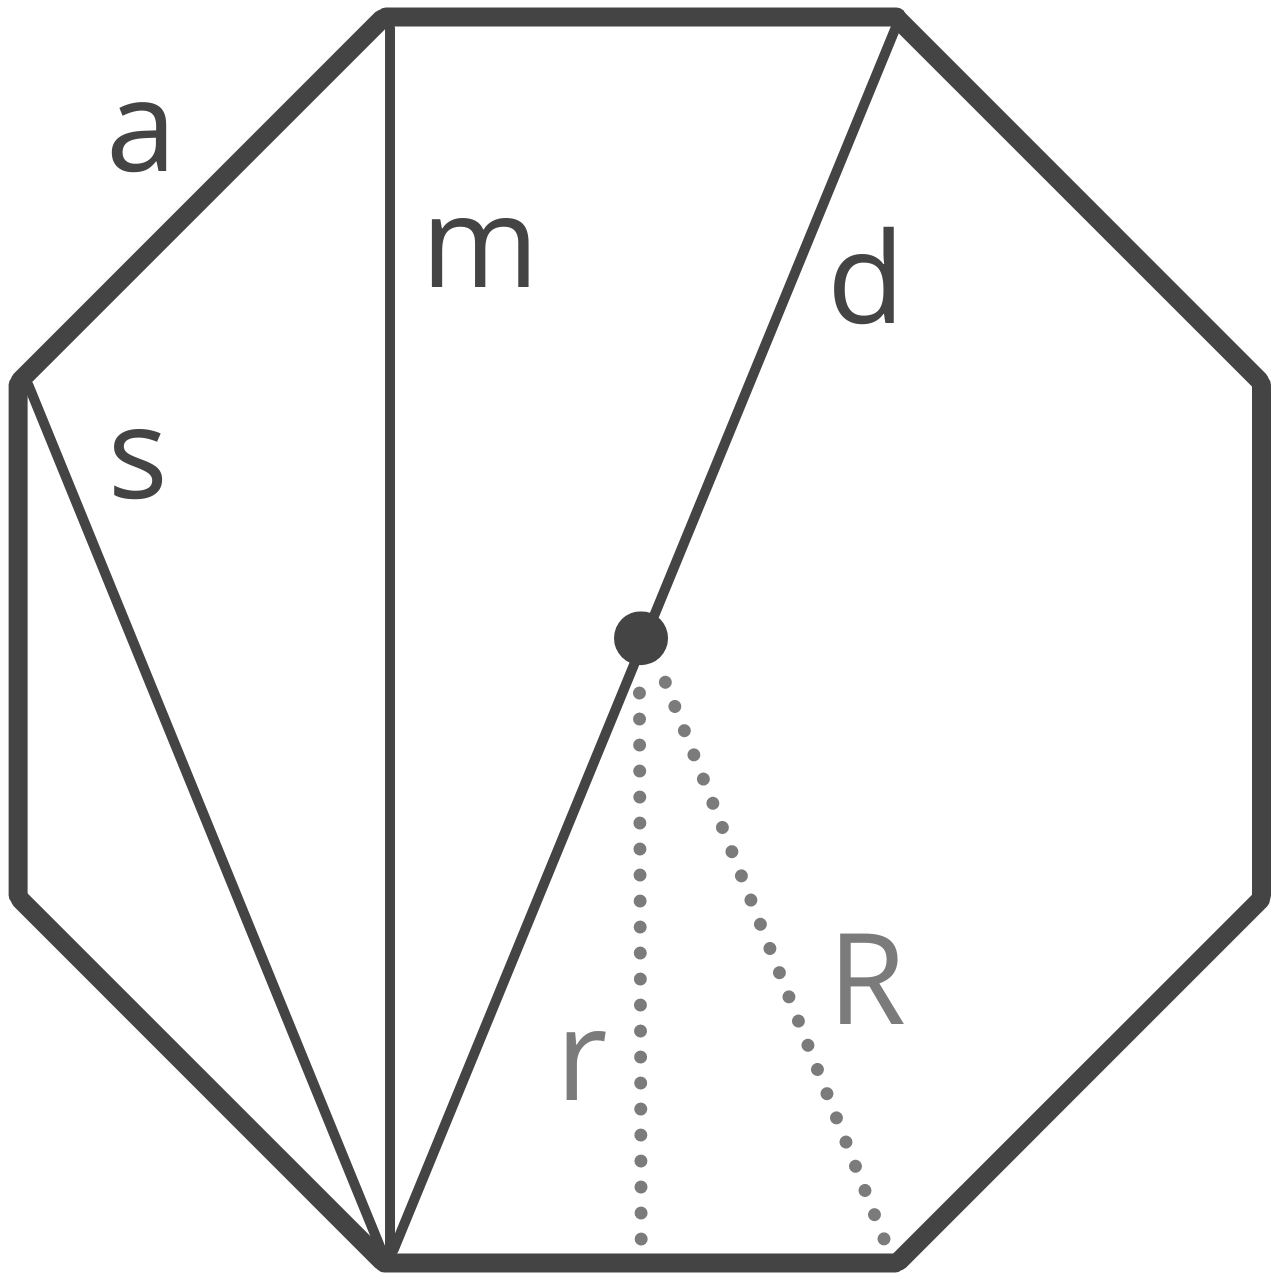 diagram of an octagon showing the sides, diagonals, circumradius, and apothem